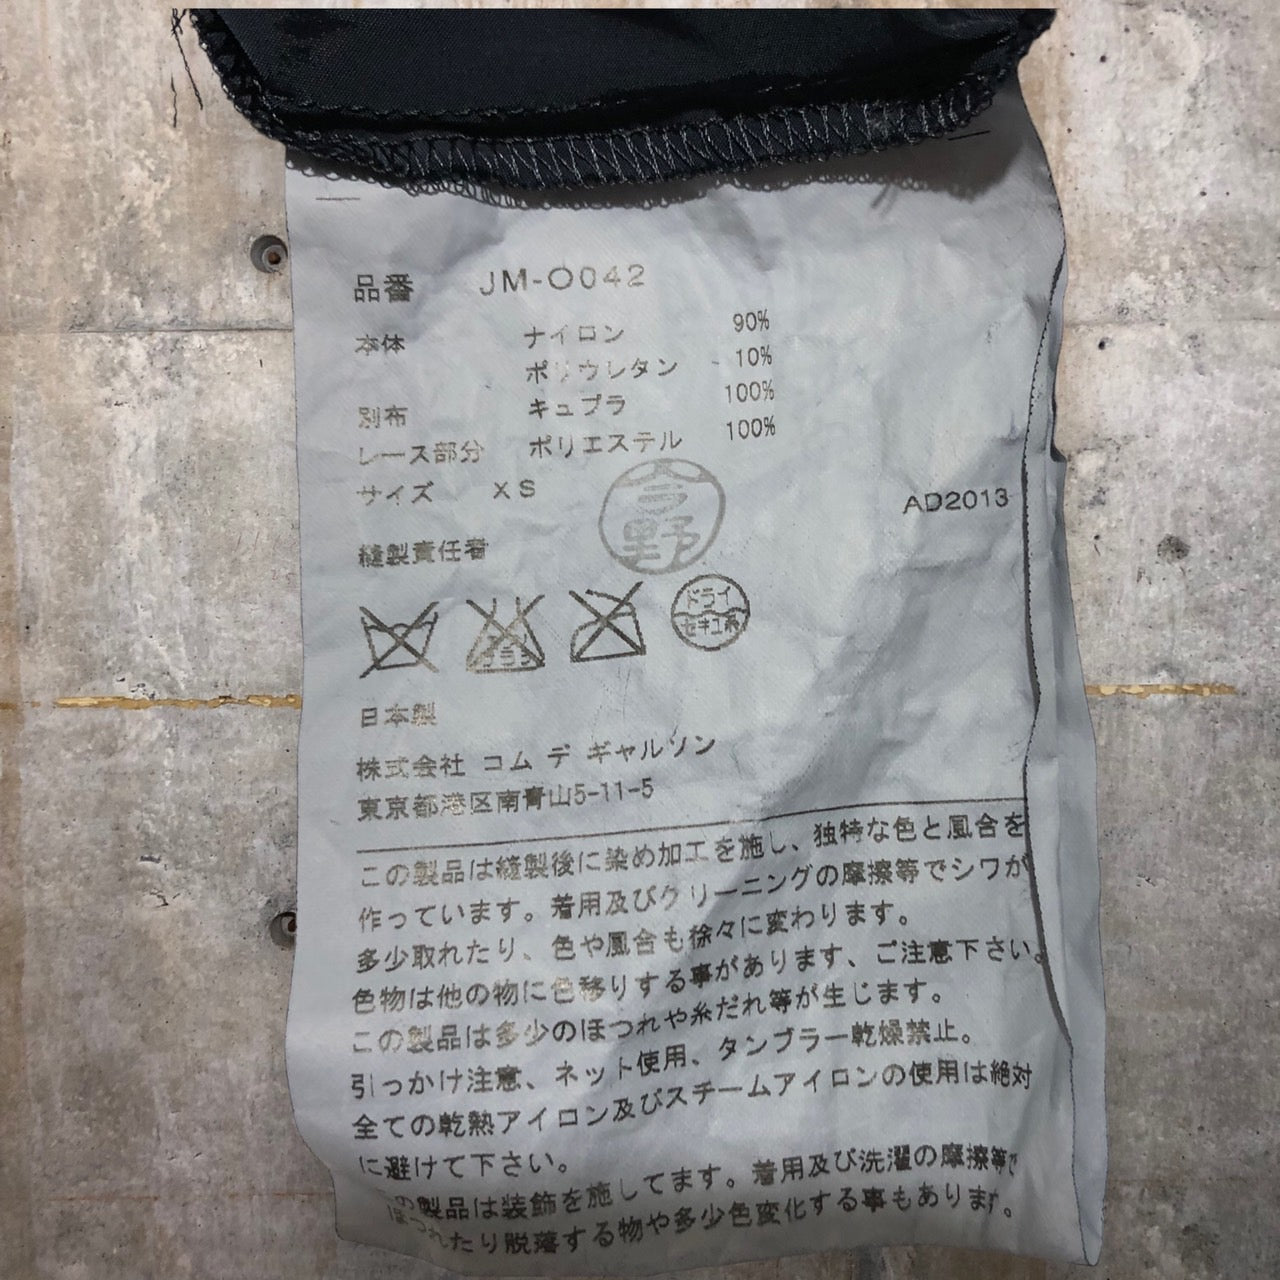 COMME des GARCONS JUNYA WATANABE(コムデギャルソンジュンヤワタナベ) 14SSスパンコール・ビーズ装飾ノースリーブドレス/ワンピース JM-O042 SIZE XS ネイビー AD2013